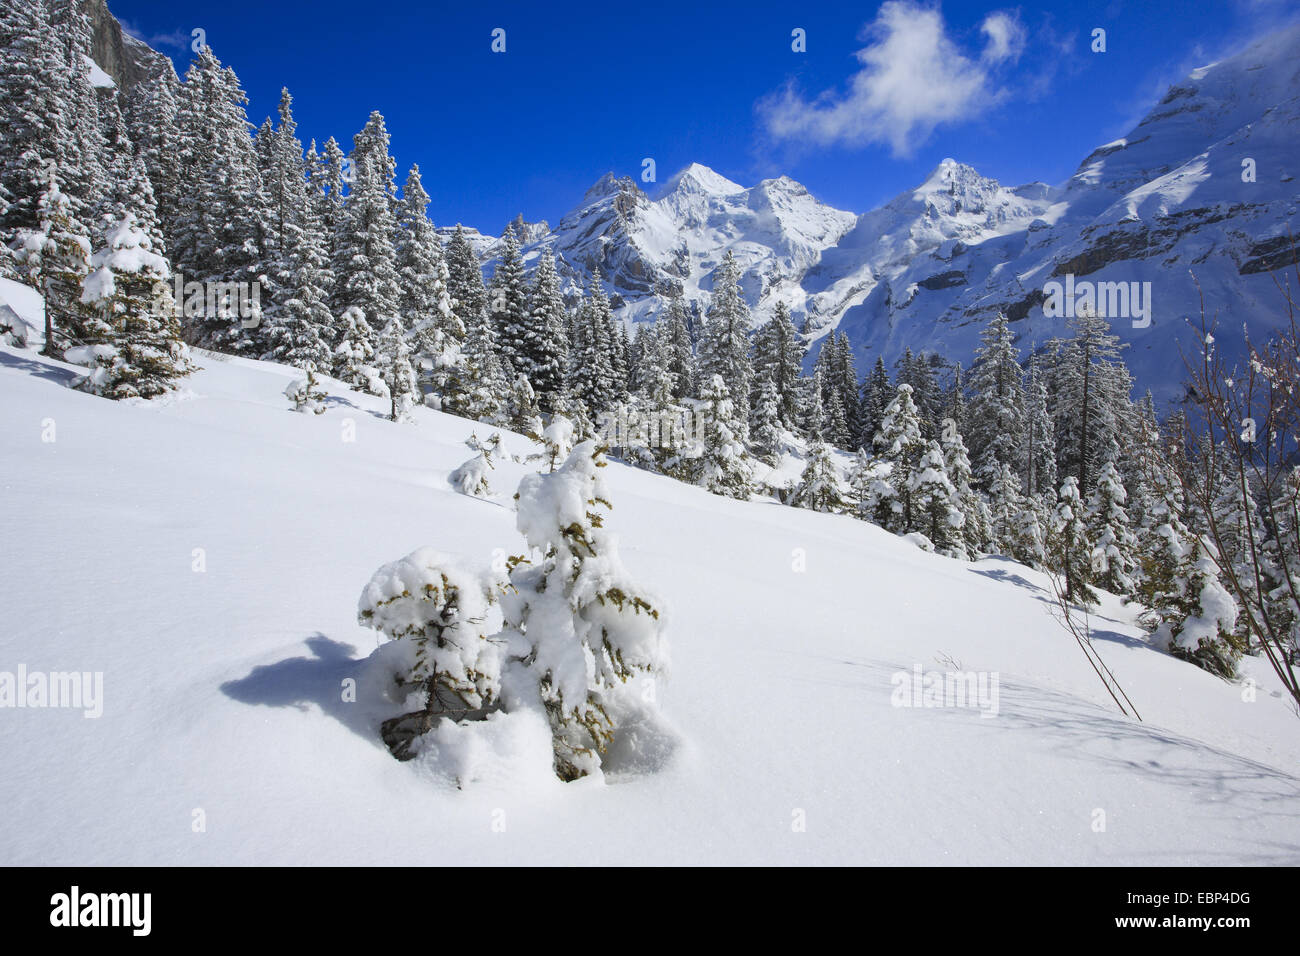 Paysage de montagne enneigée avec Blueemlisalp Rothorn, Blueemlisalphorn, Oeschinenhorn, Suisse, Alpes Bernoises Banque D'Images